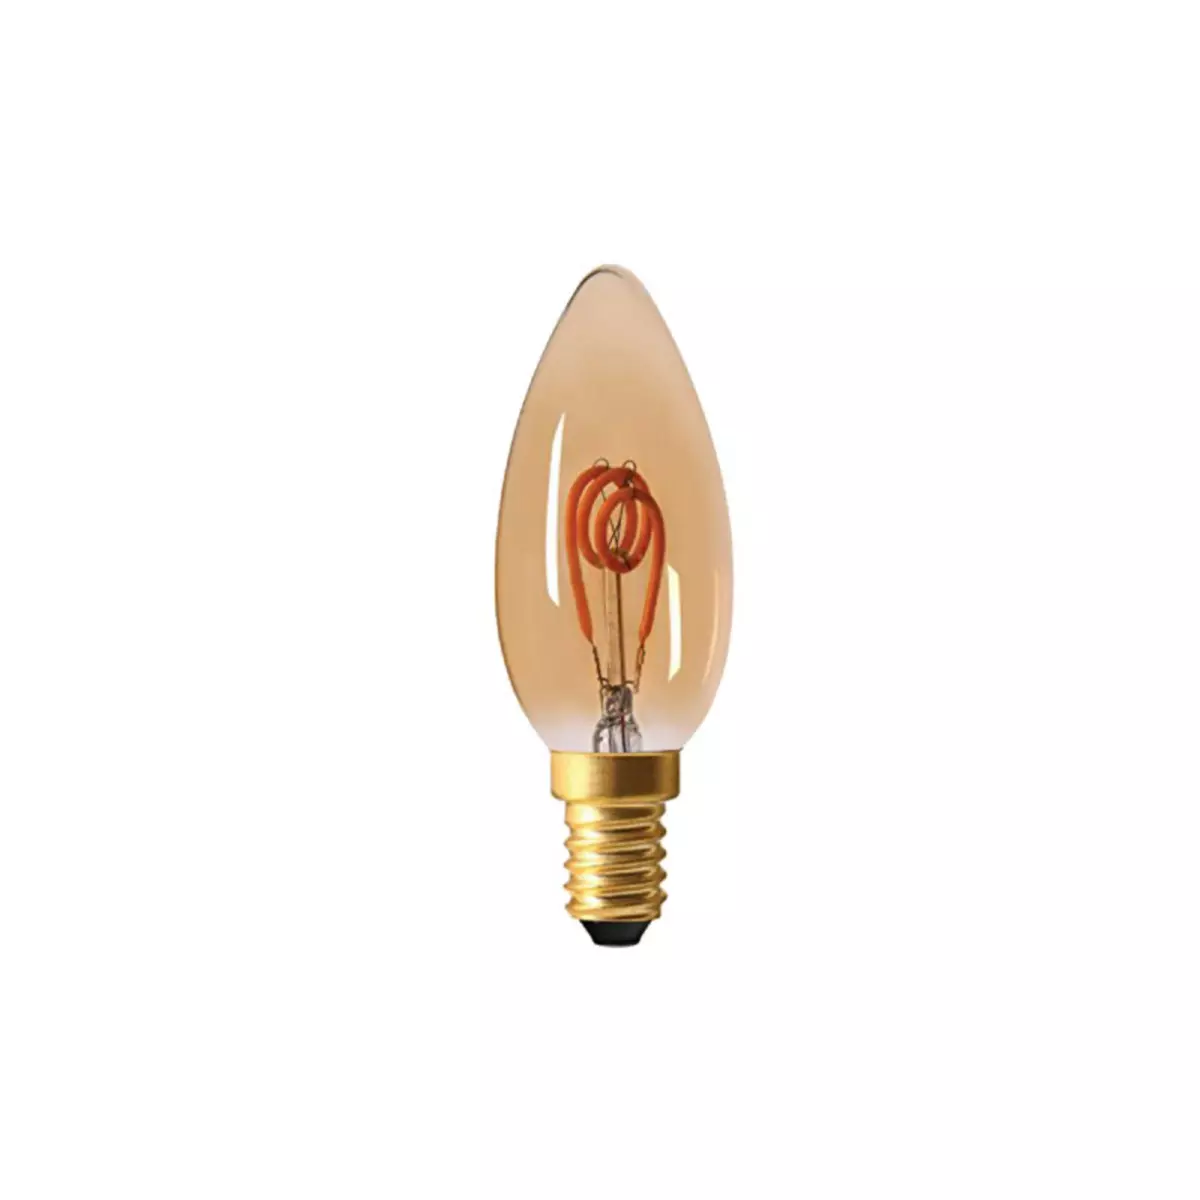  Ampoule LED flamme XXCELL - 3 W - 130 lumens - 2100 K - E14